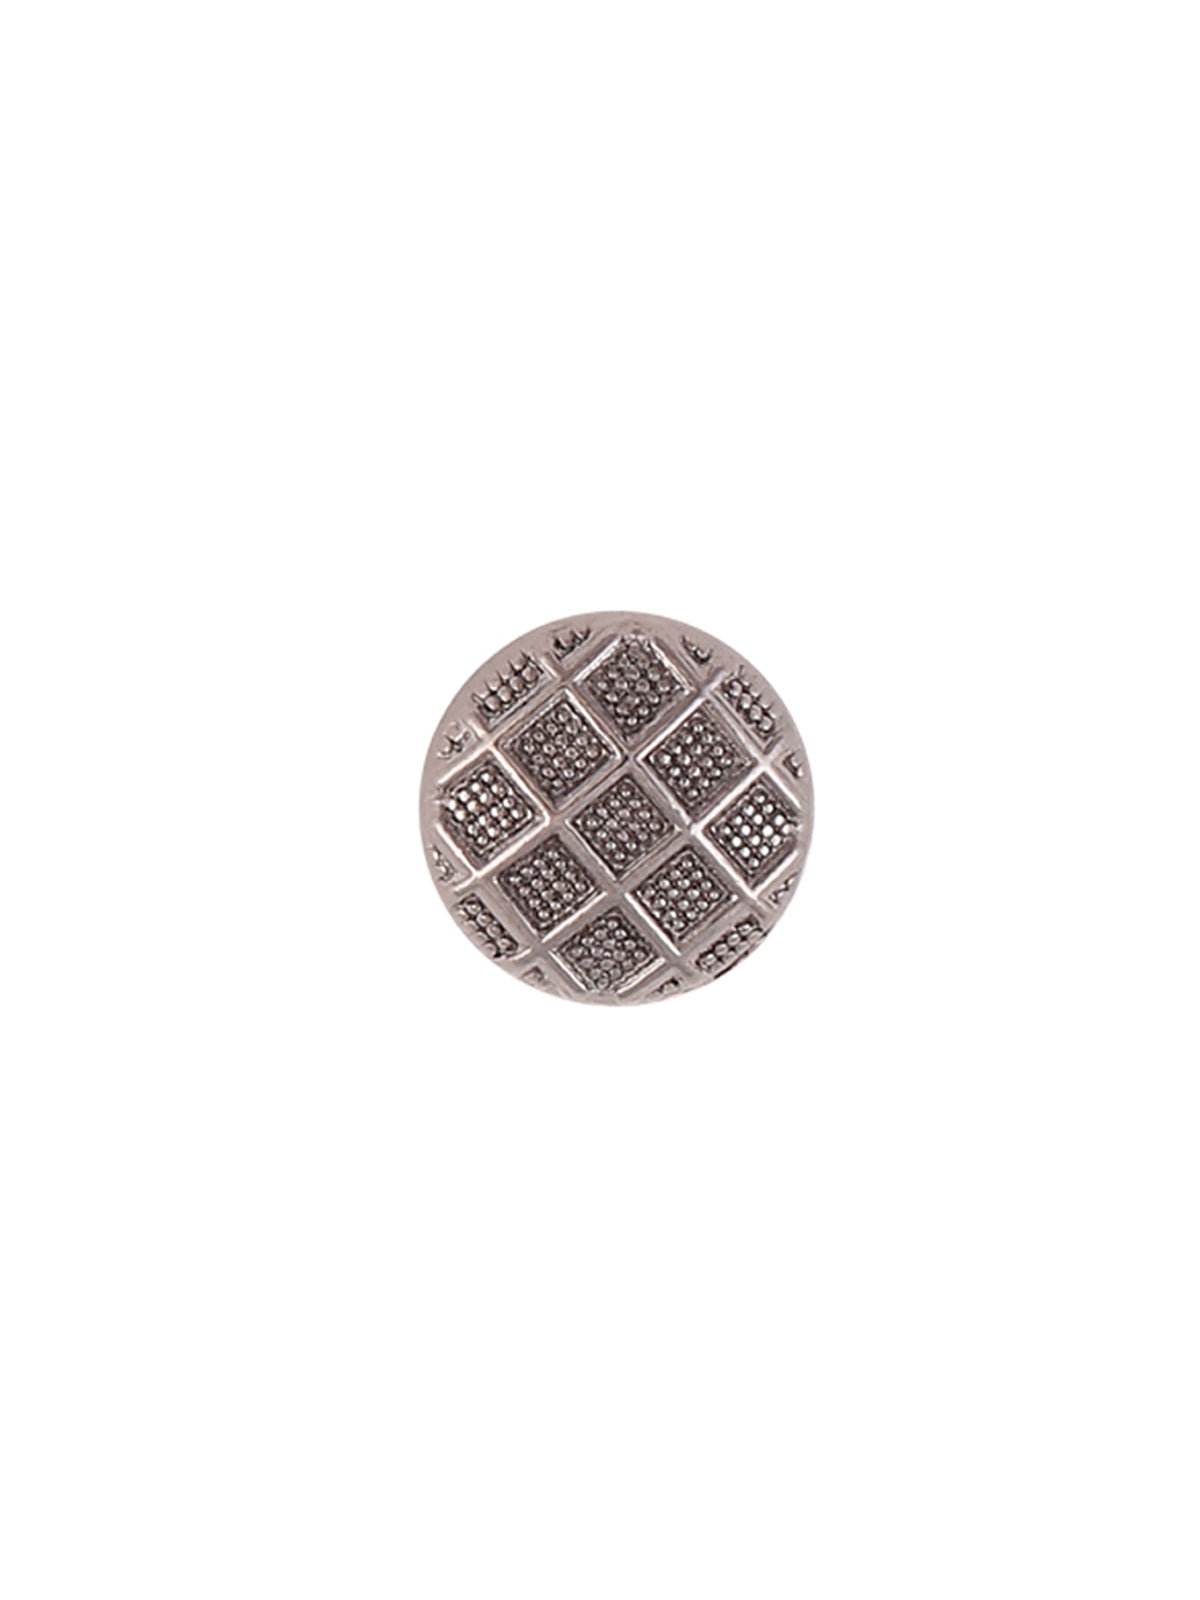 Engraved Design Round Shape Metal Button in Black Nickel (Gunmetal) Color